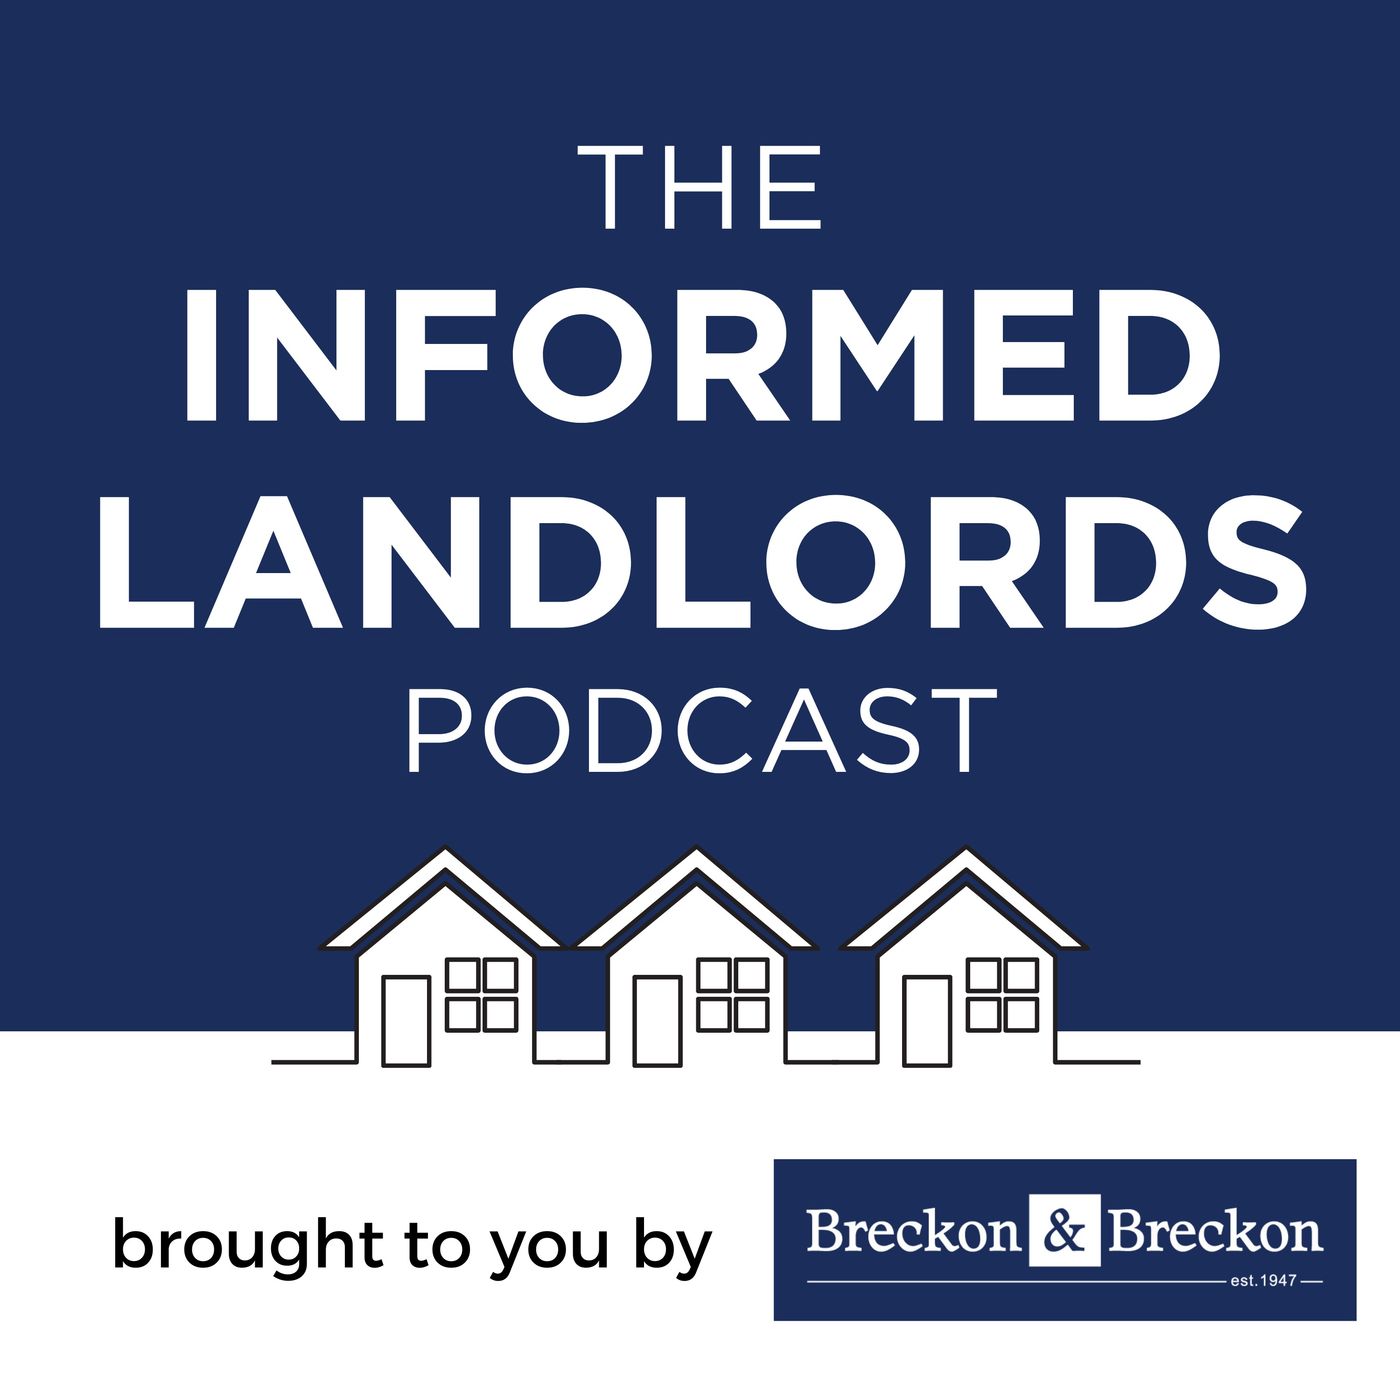 The Informed Landlords Podcast